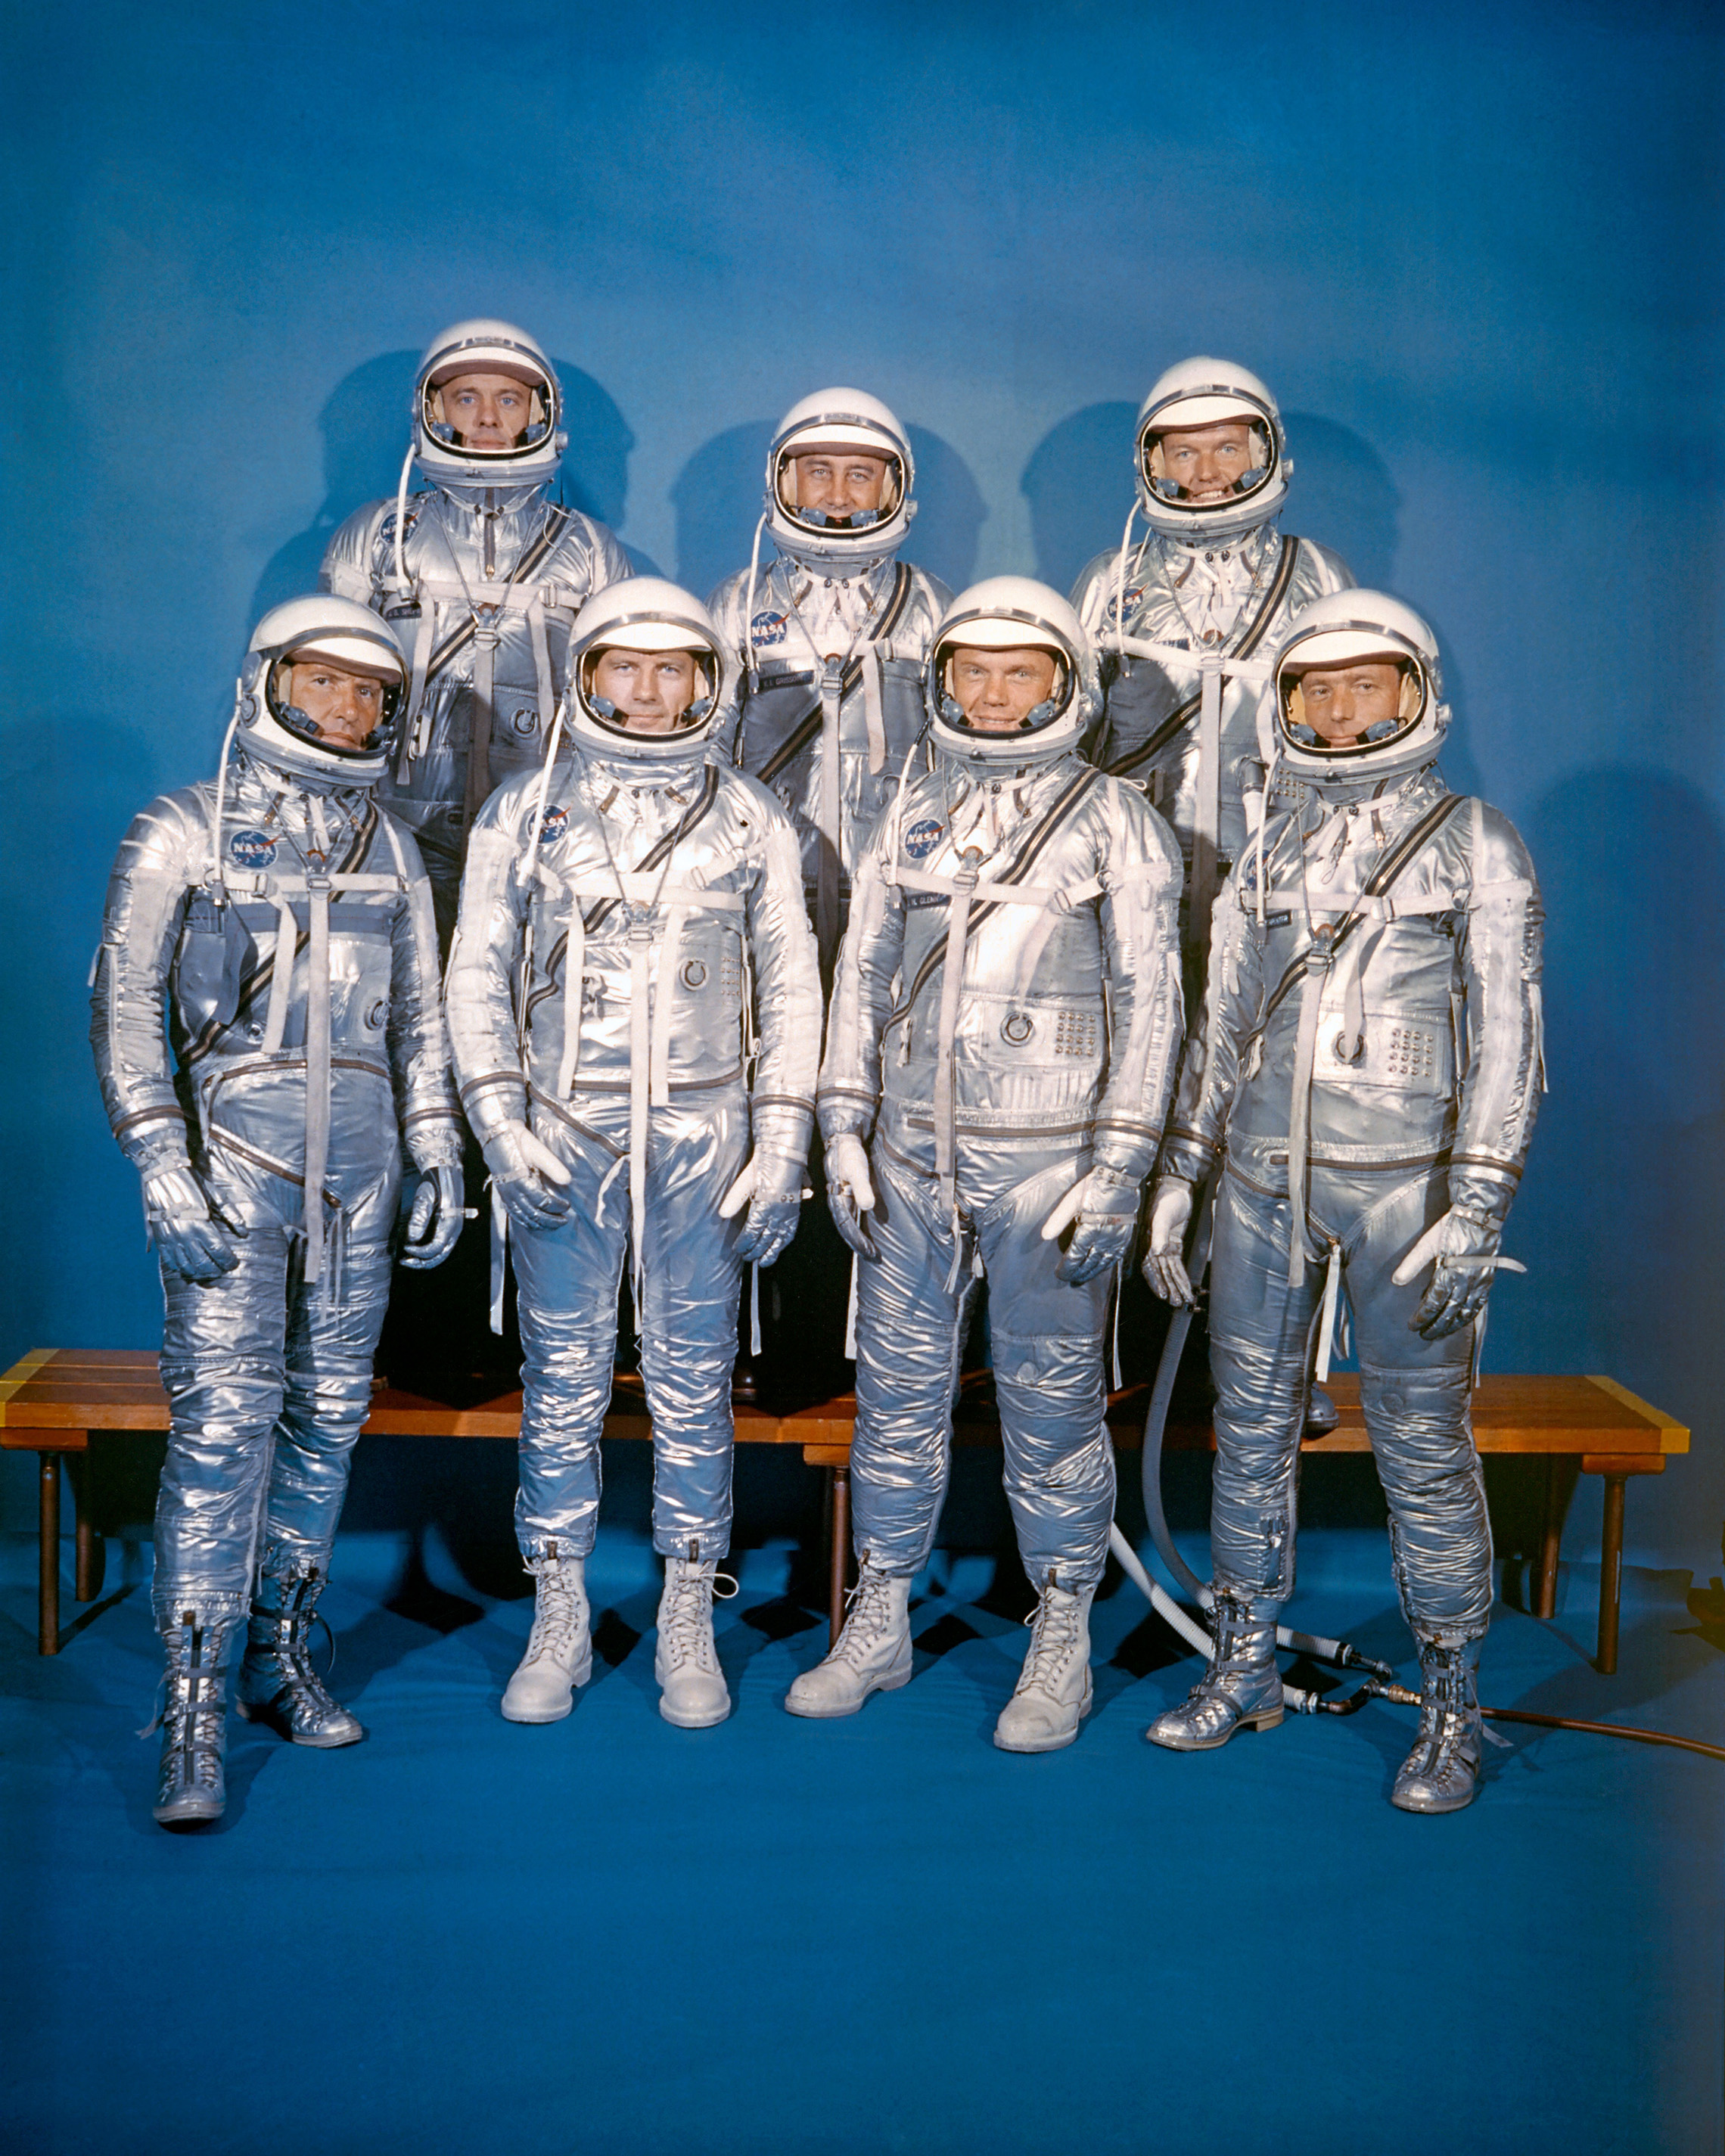 El 9 de abril de 1959, la NASA introdujo su primera clase de astronauta, el Mercury 7. Fila delantera, de izquierda a derecha: Walter M. Schirra, Jr., Donald K. "Deke" Slayton, John H. Glenn, Jr. y M. Scott Carpenter; fila trasera: Alan B. Shepard, Jr., Virgil I. " Gus " Grissom y L. Gordon Cooper, Jr. (NASA)"Deke" Slayton, John H. Glenn, Jr., and M. Scott Carpenter; back row, Alan B. Shepard, Jr., Virgil I. "Gus" Grissom, and L. Gordon Cooper, Jr. (NASA)